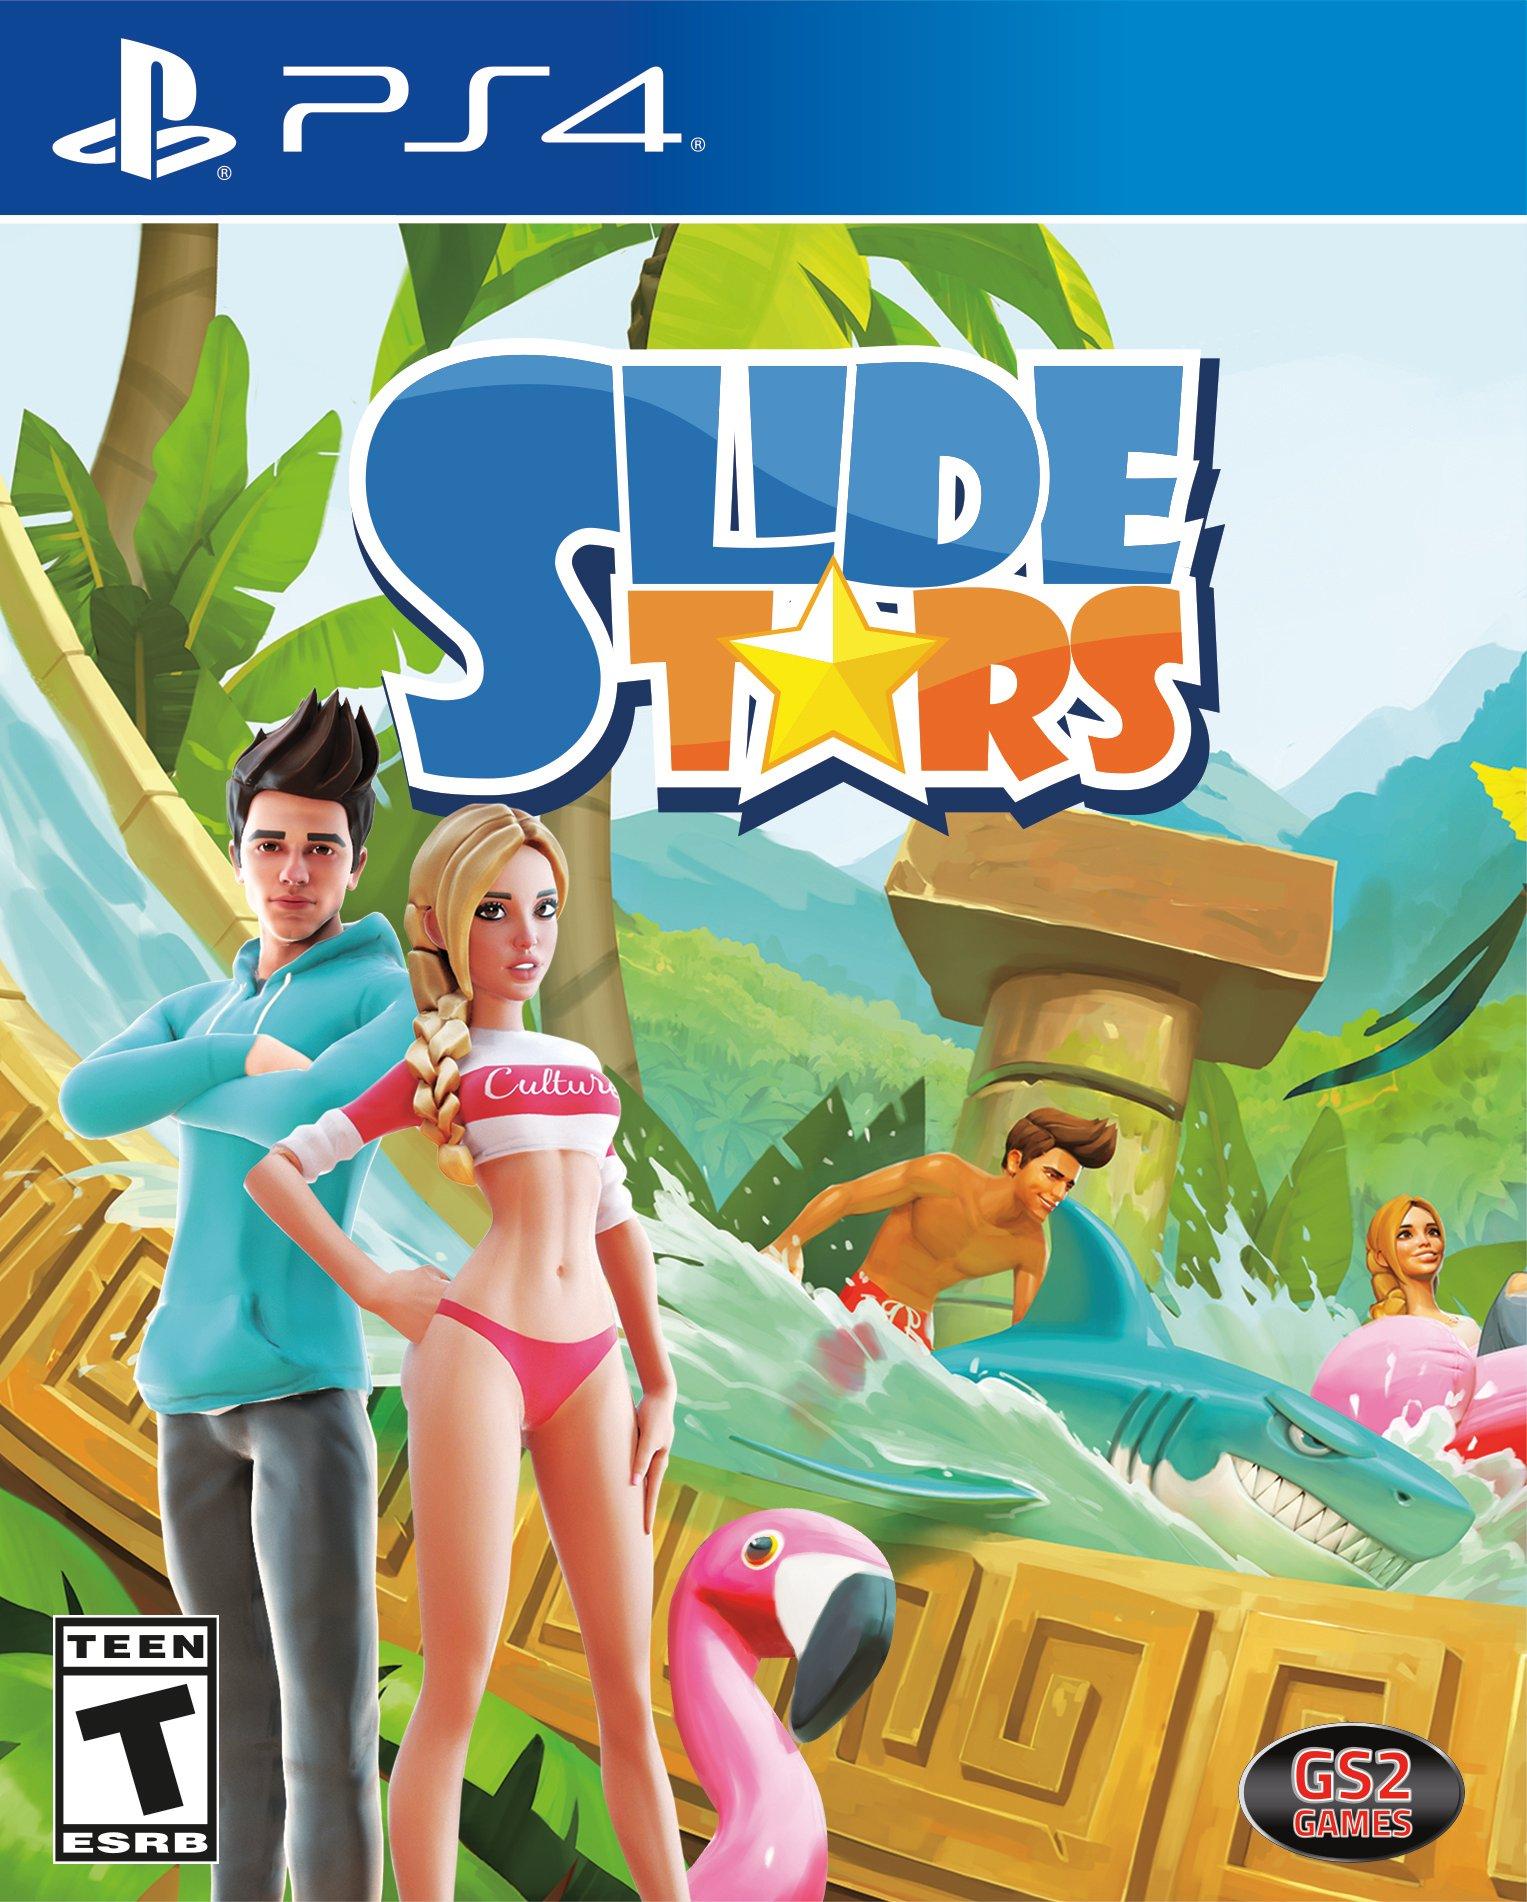 Slide Stars - Playstation 4 - Pro-Distributing